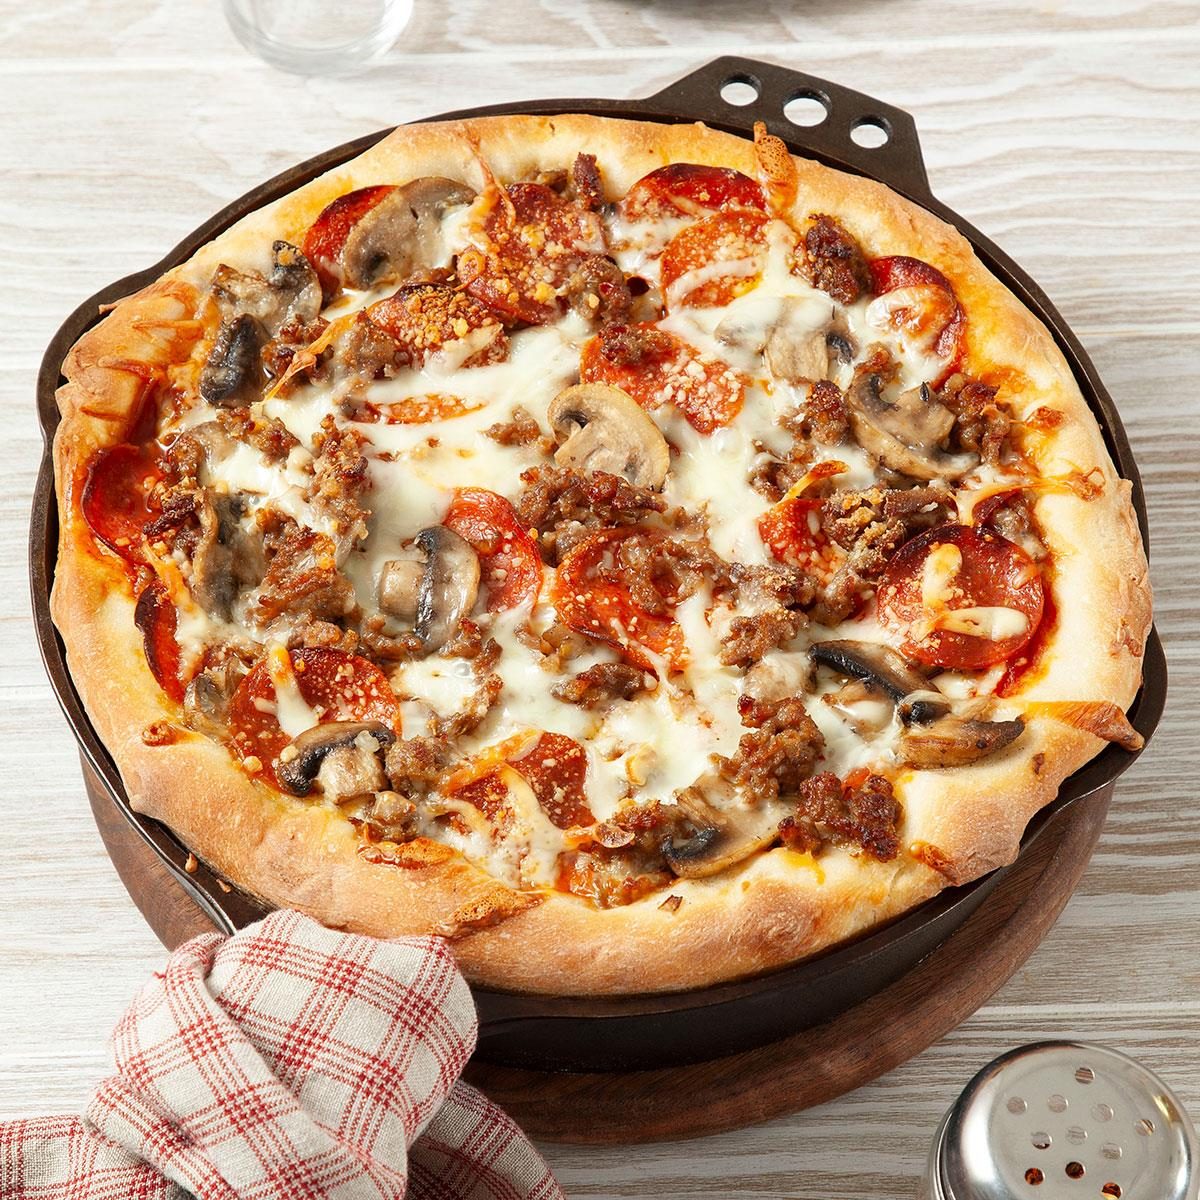 https://www.tasteofhome.com/wp-content/uploads/2018/01/Chicago-Style-Deep-Dish-Pizza_EXPS_FT23_17170_JR_1129_1.jpg